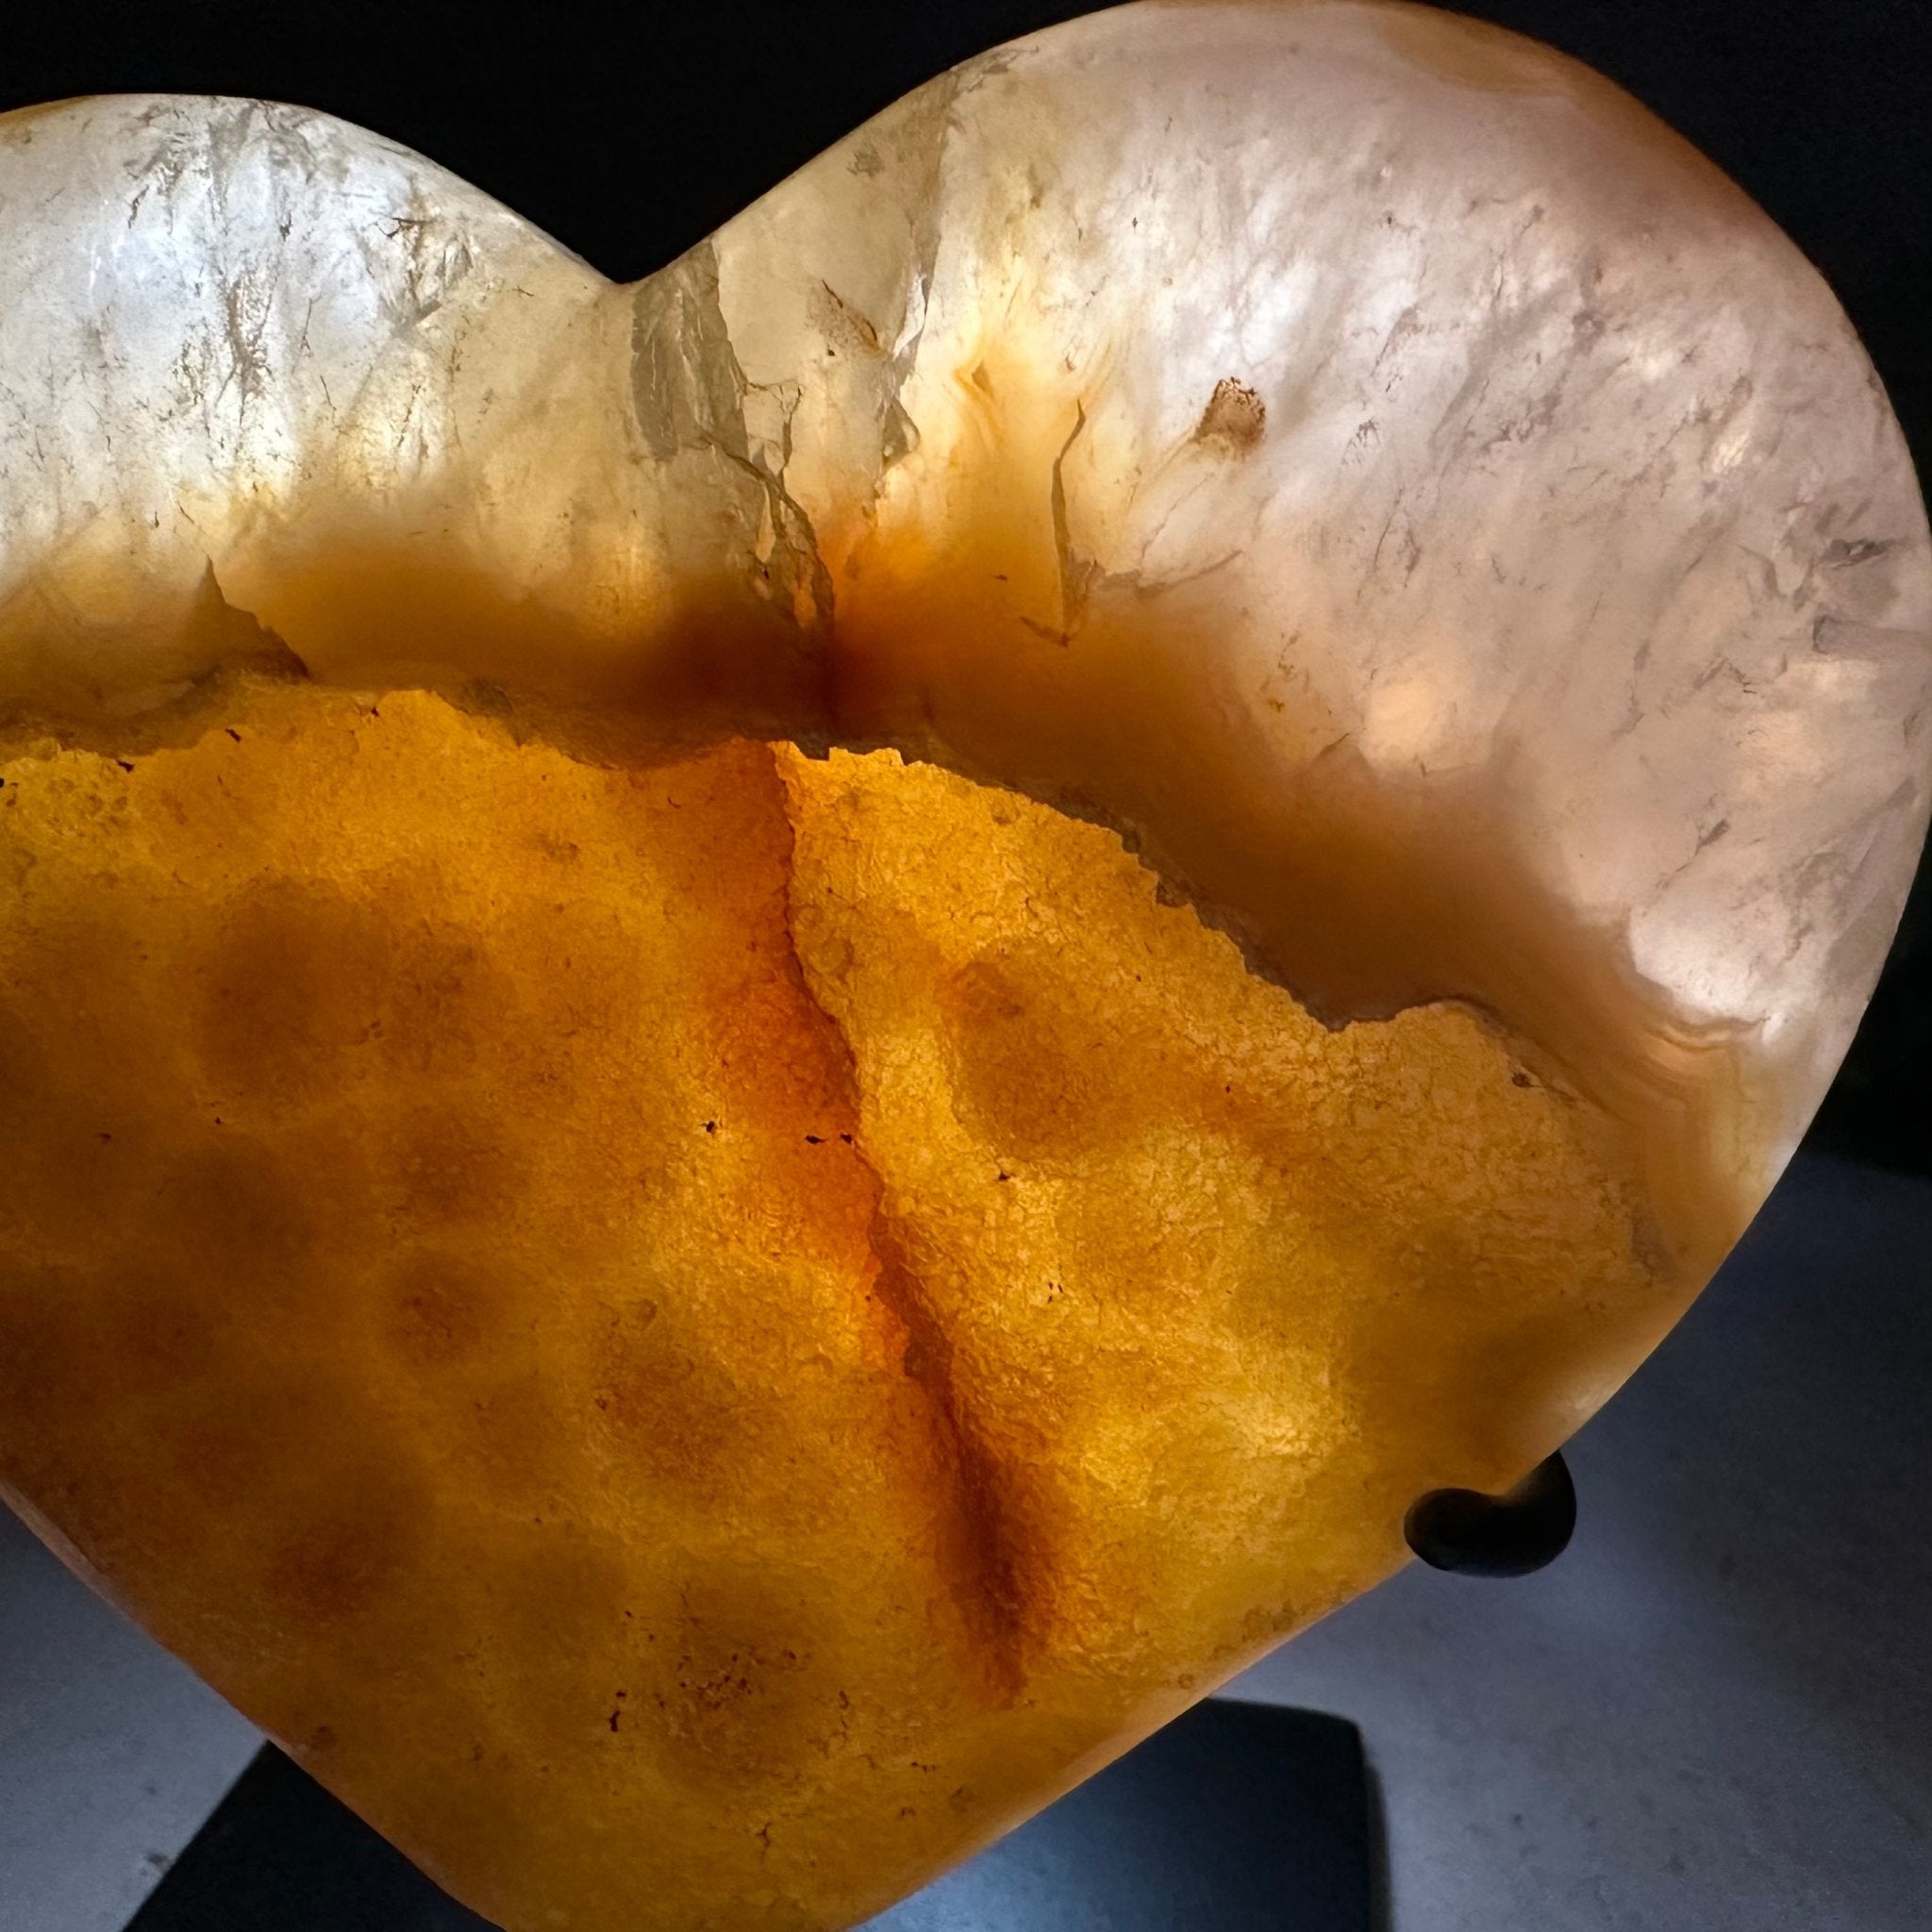 Polished Agate Heart Geode on a Metal Stand, 1.5 lbs & 4.4" Tall, Model #5468-0017 by Brazil Gems - Brazil GemsBrazil GemsPolished Agate Heart Geode on a Metal Stand, 1.5 lbs & 4.4" Tall, Model #5468-0017 by Brazil GemsHearts5468-0017